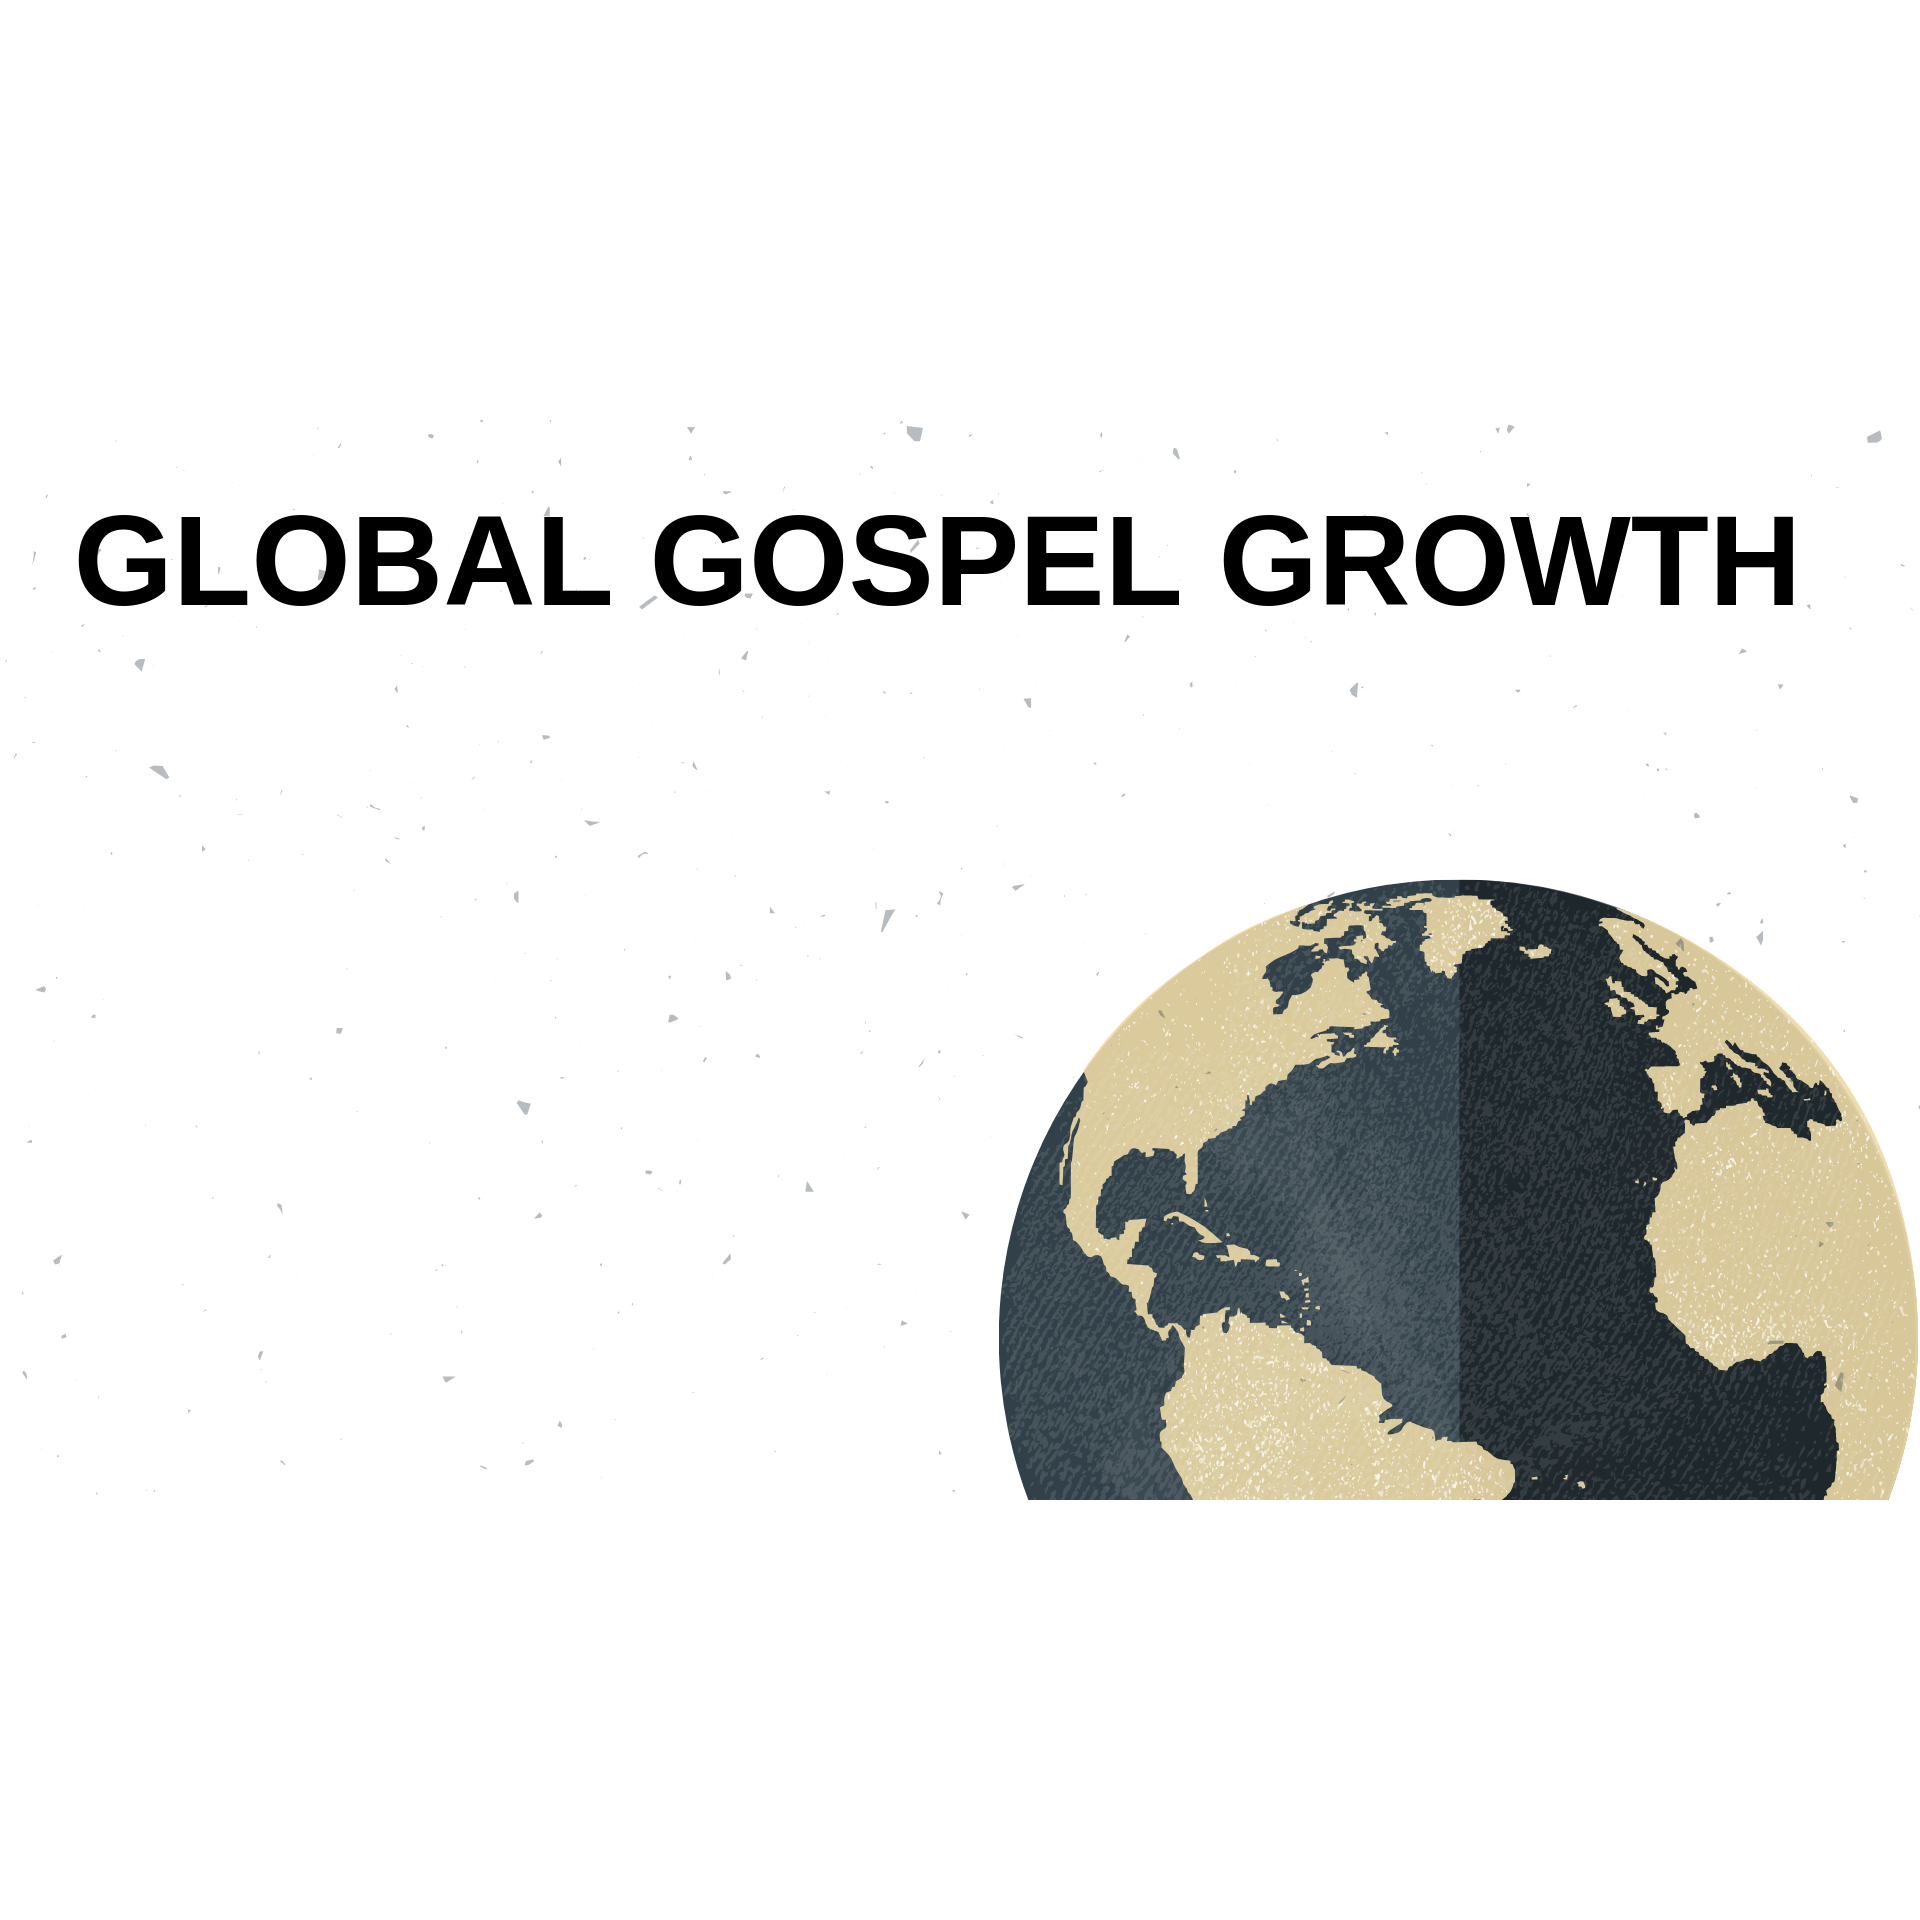 Going for Global Gospel Growth